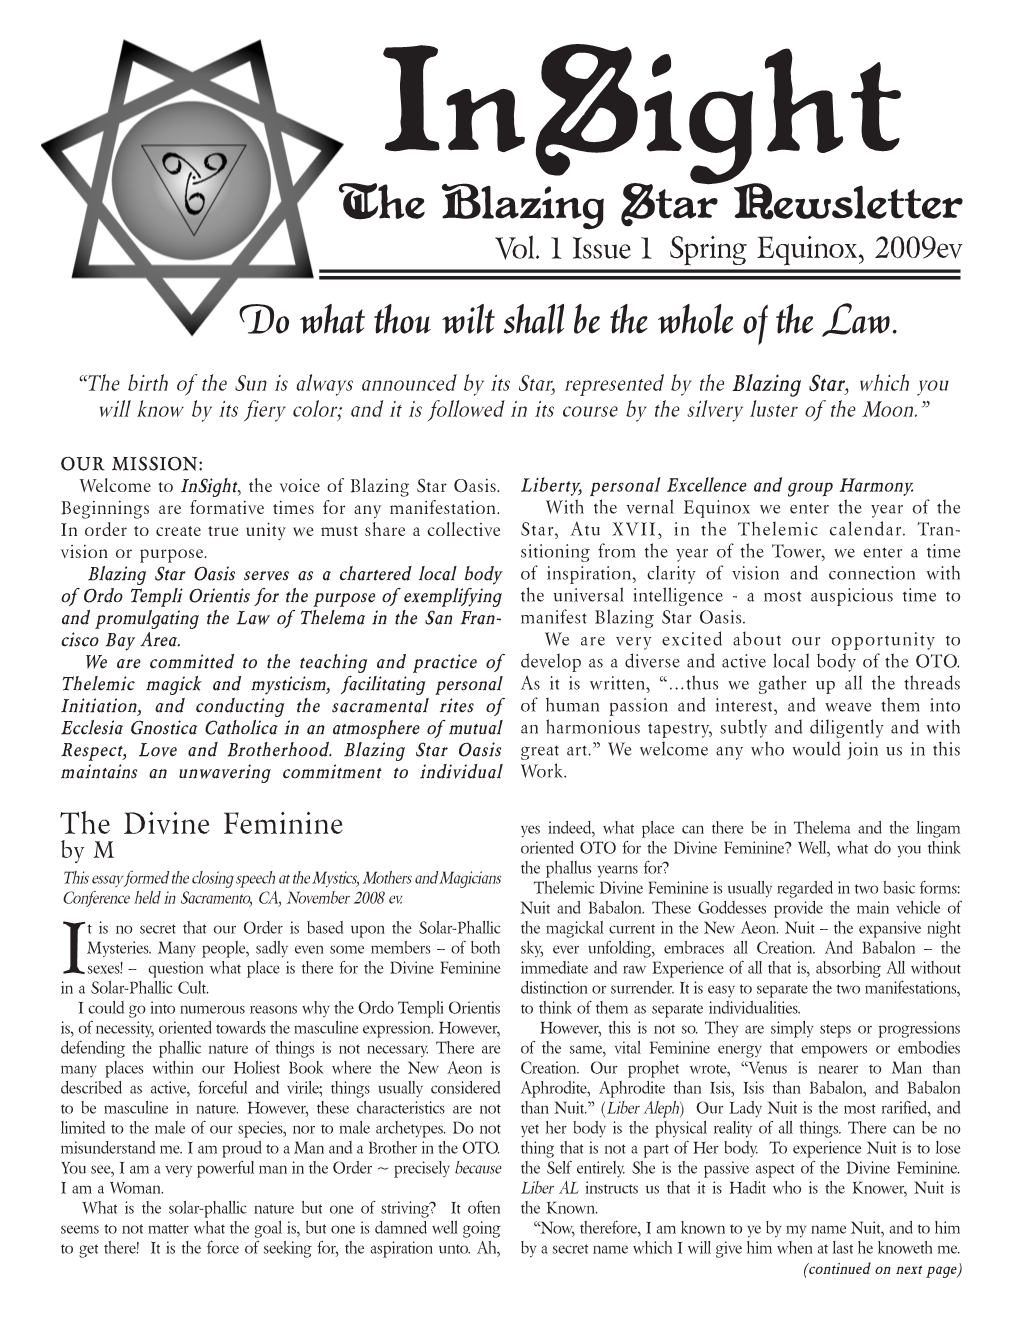 The Blazing Star Newsletter Vol